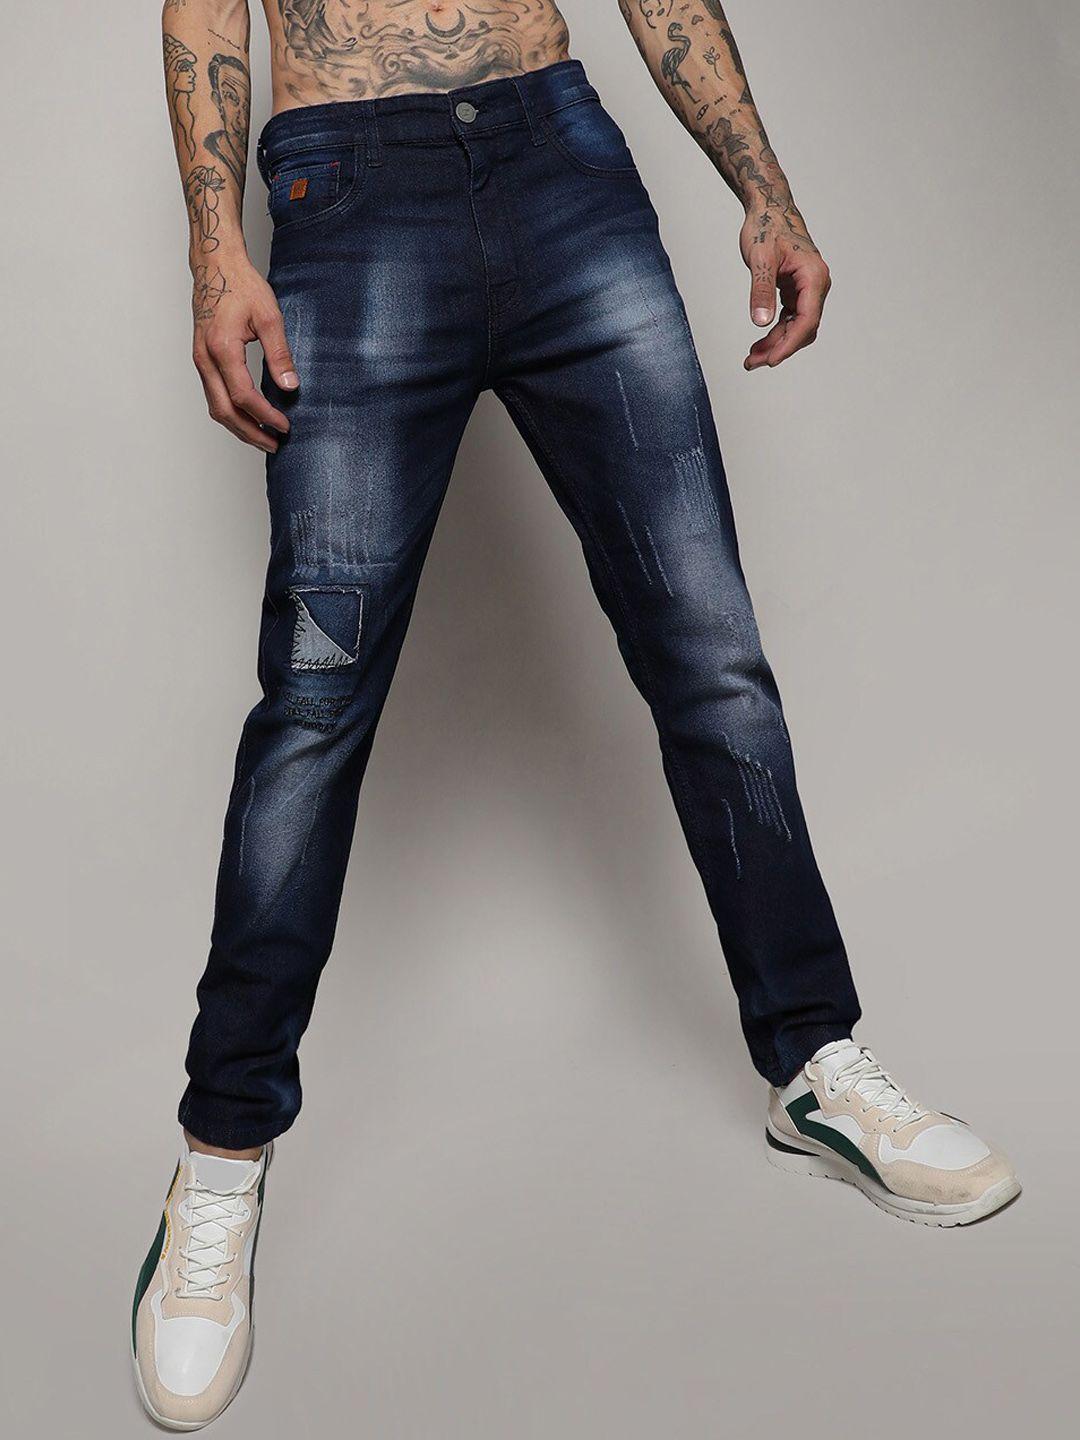 campus sutra men smart slim fit mildly distressed light fade jeans